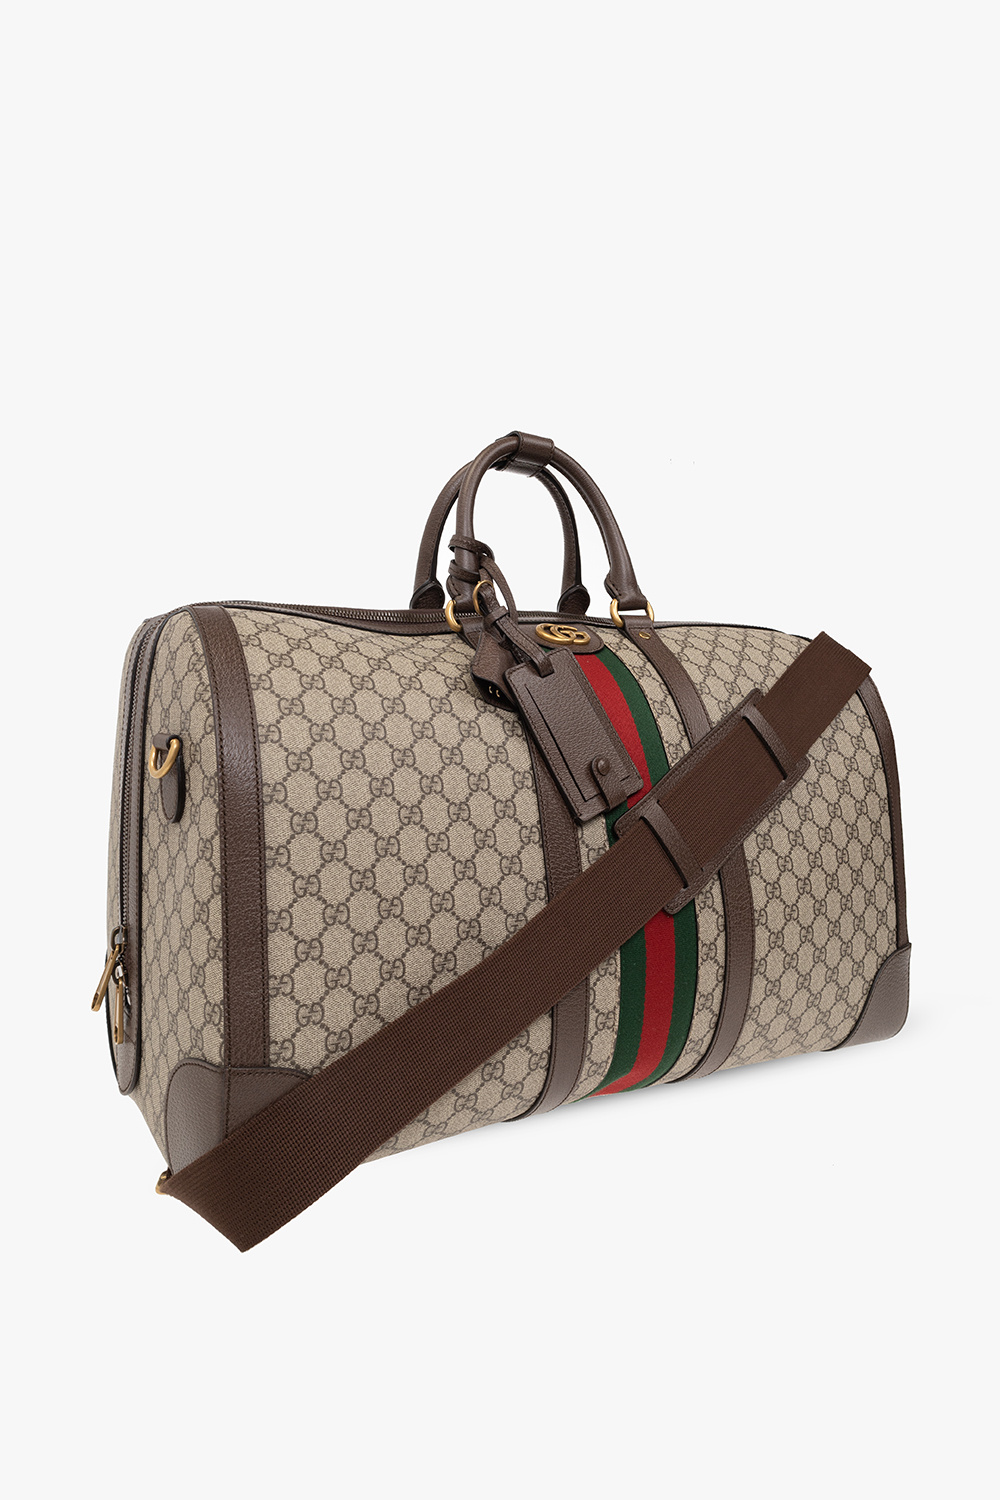 large Gucci Savoy duffle bag